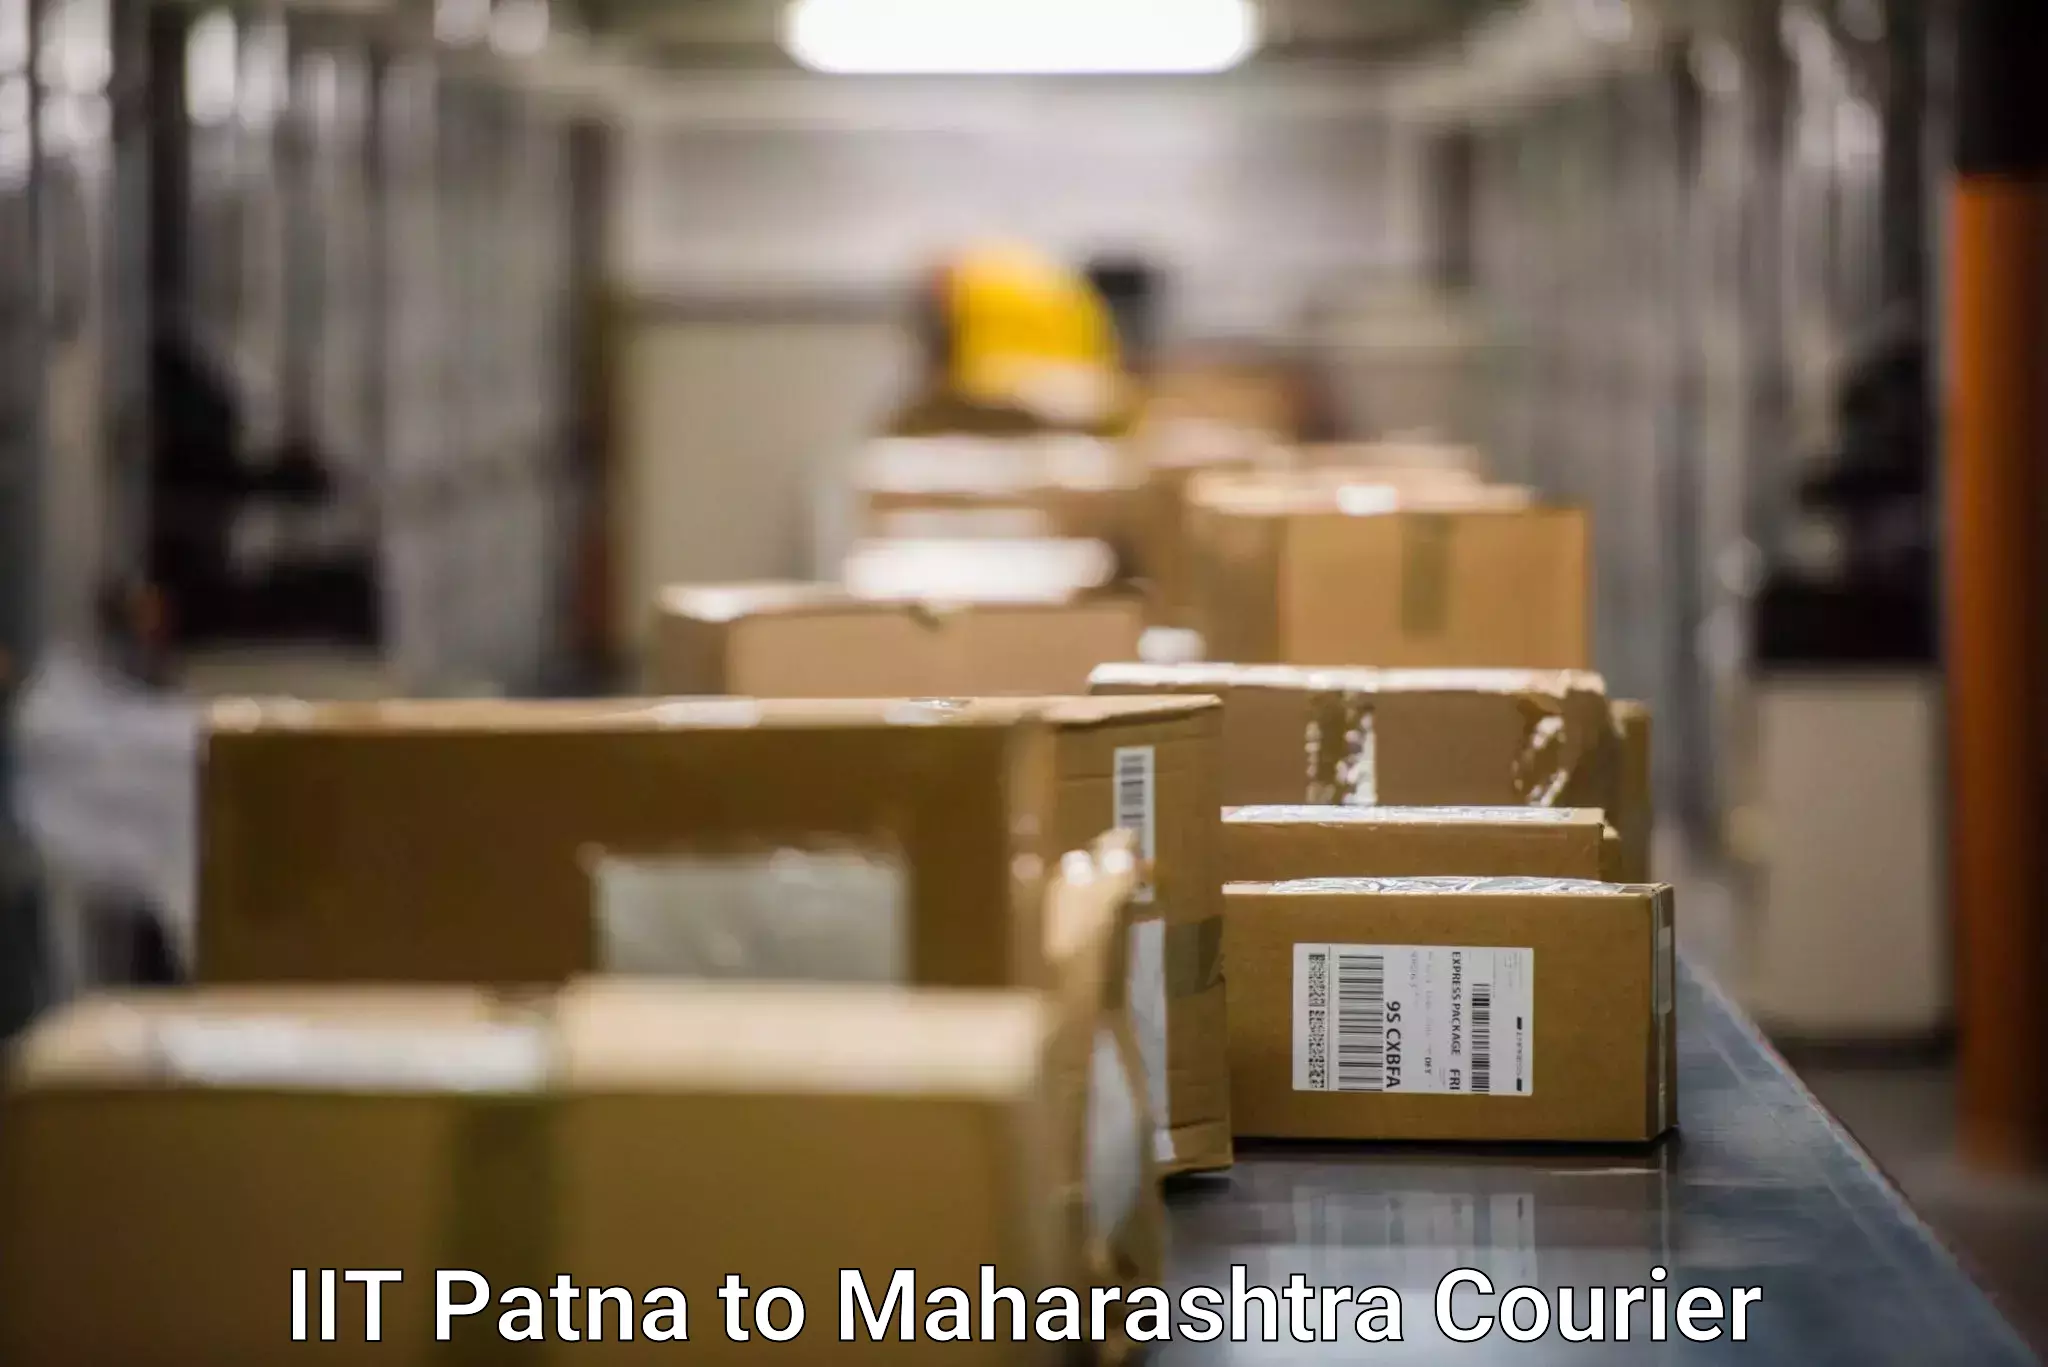 Express logistics providers in IIT Patna to Satara